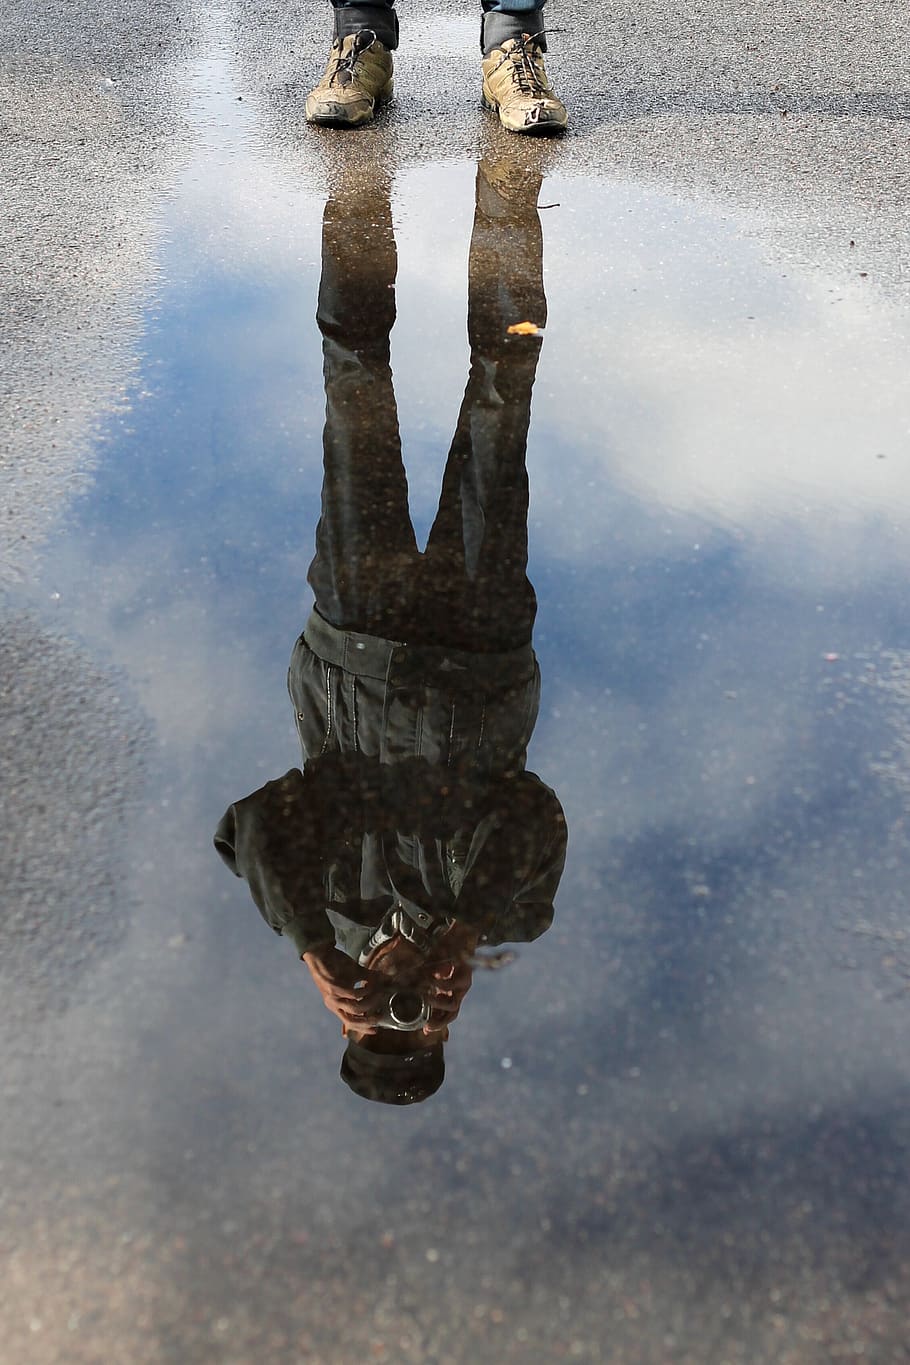 man, photographed, water, puddle, mirroring, rain, reflection, wet, asphalt, shoes